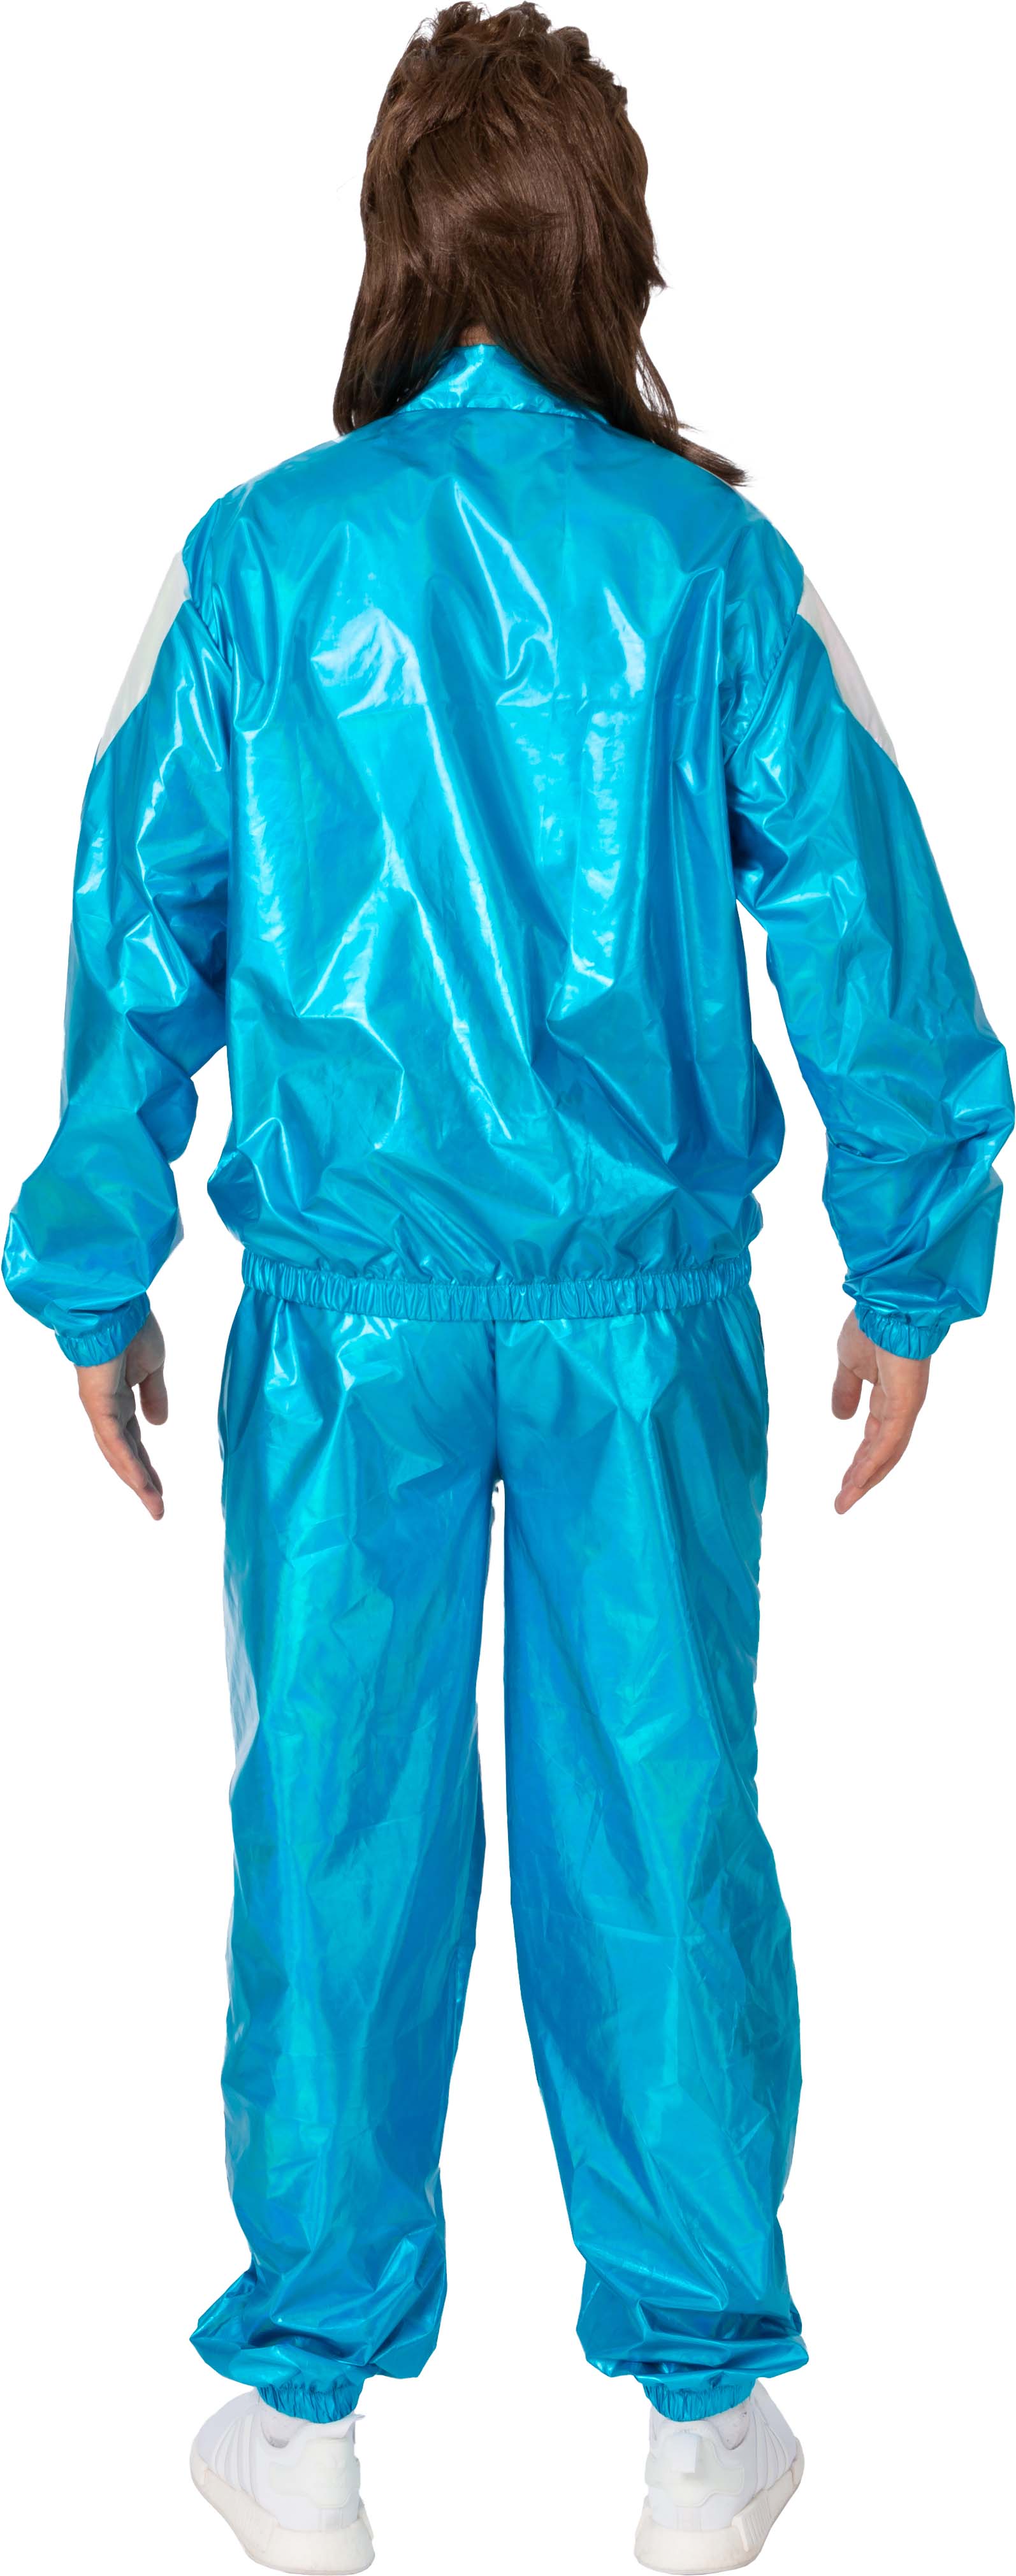 Jogging suit vinyl, turquoise